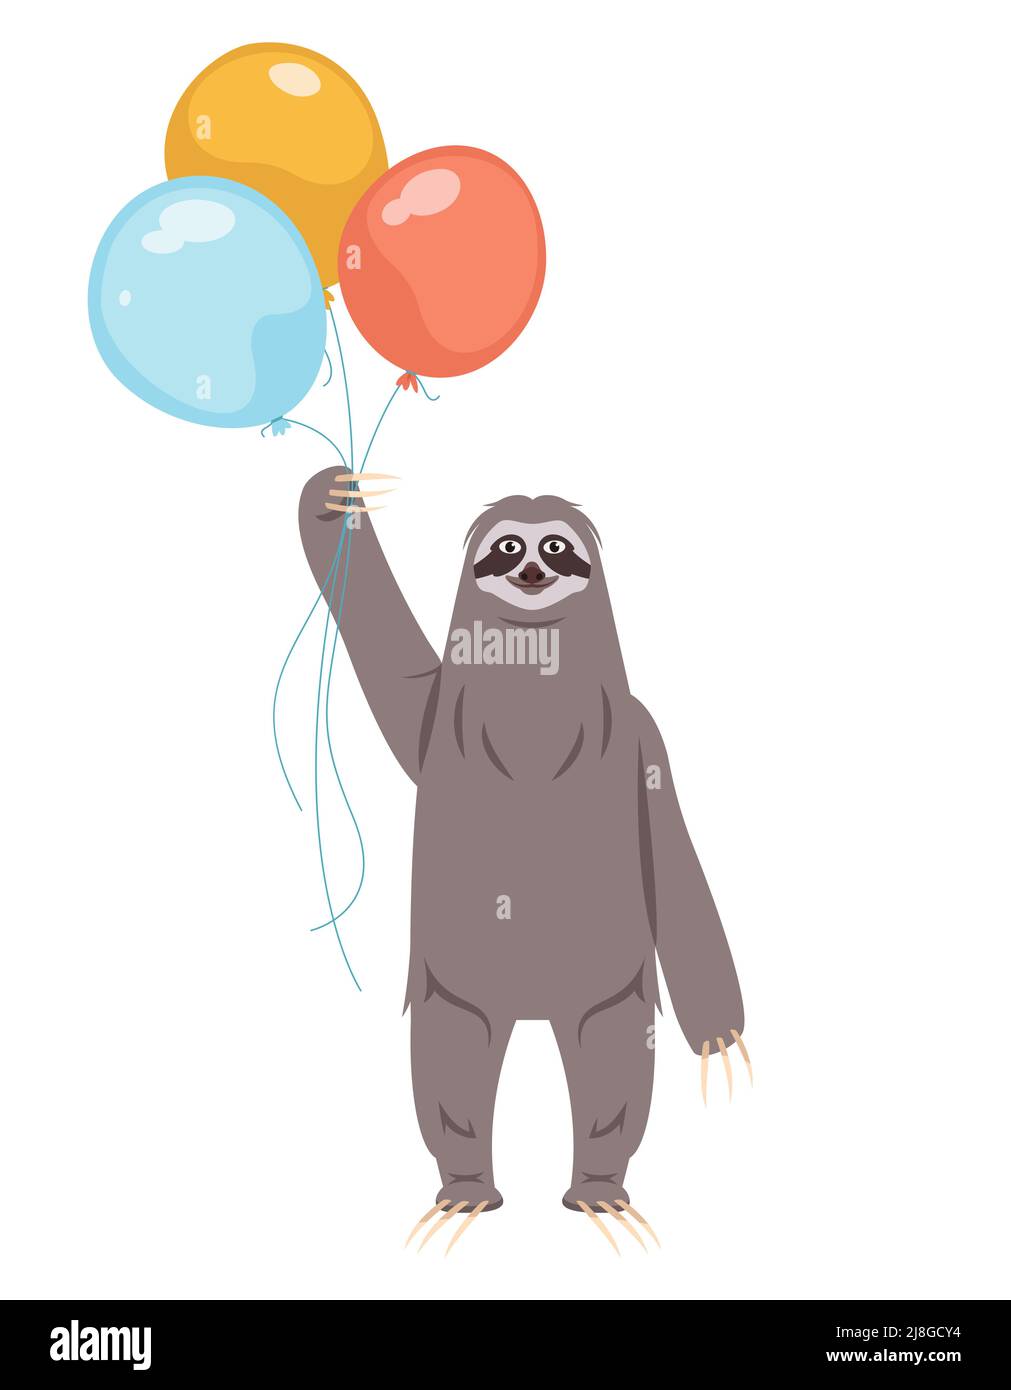 Sloth holding balloons. Animal in cartoon style. Stock Vector